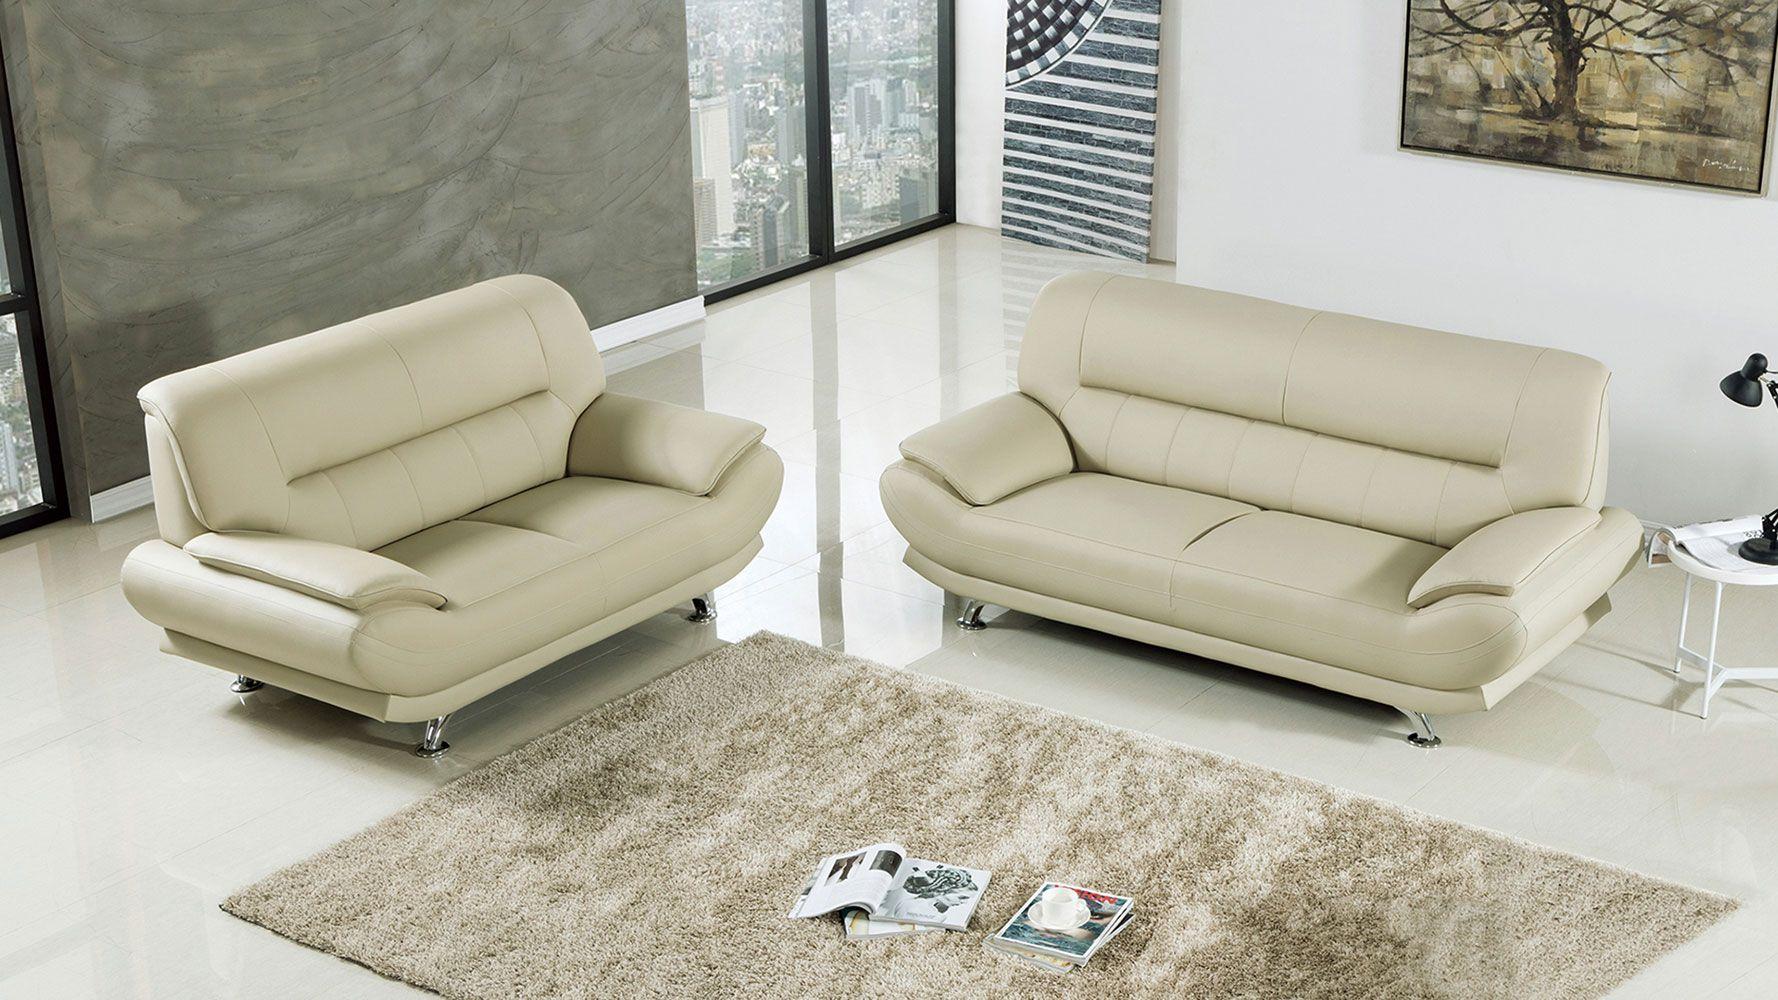 Contemporary, Modern Sofa Set AE709-CRM AE709-CRM-2PC in Khaki Bonded Leather